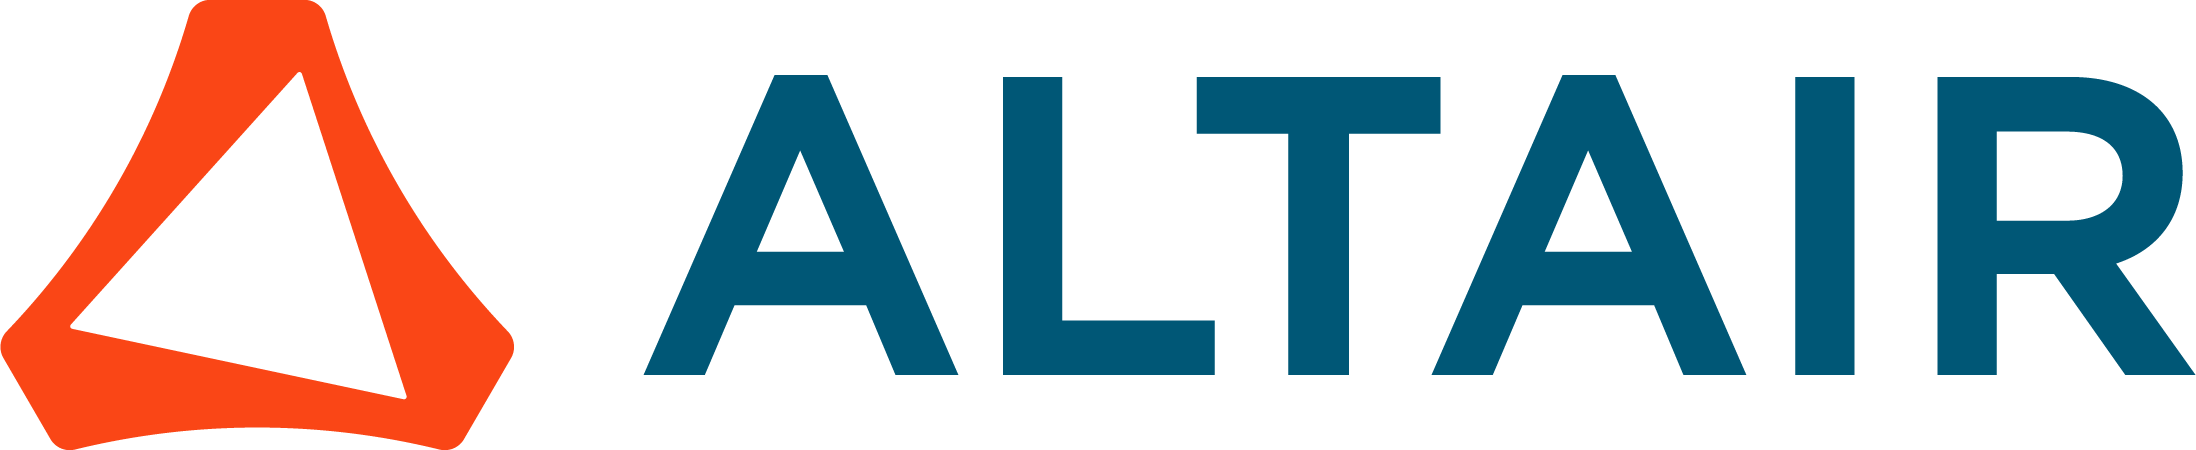 Altair_logo-1